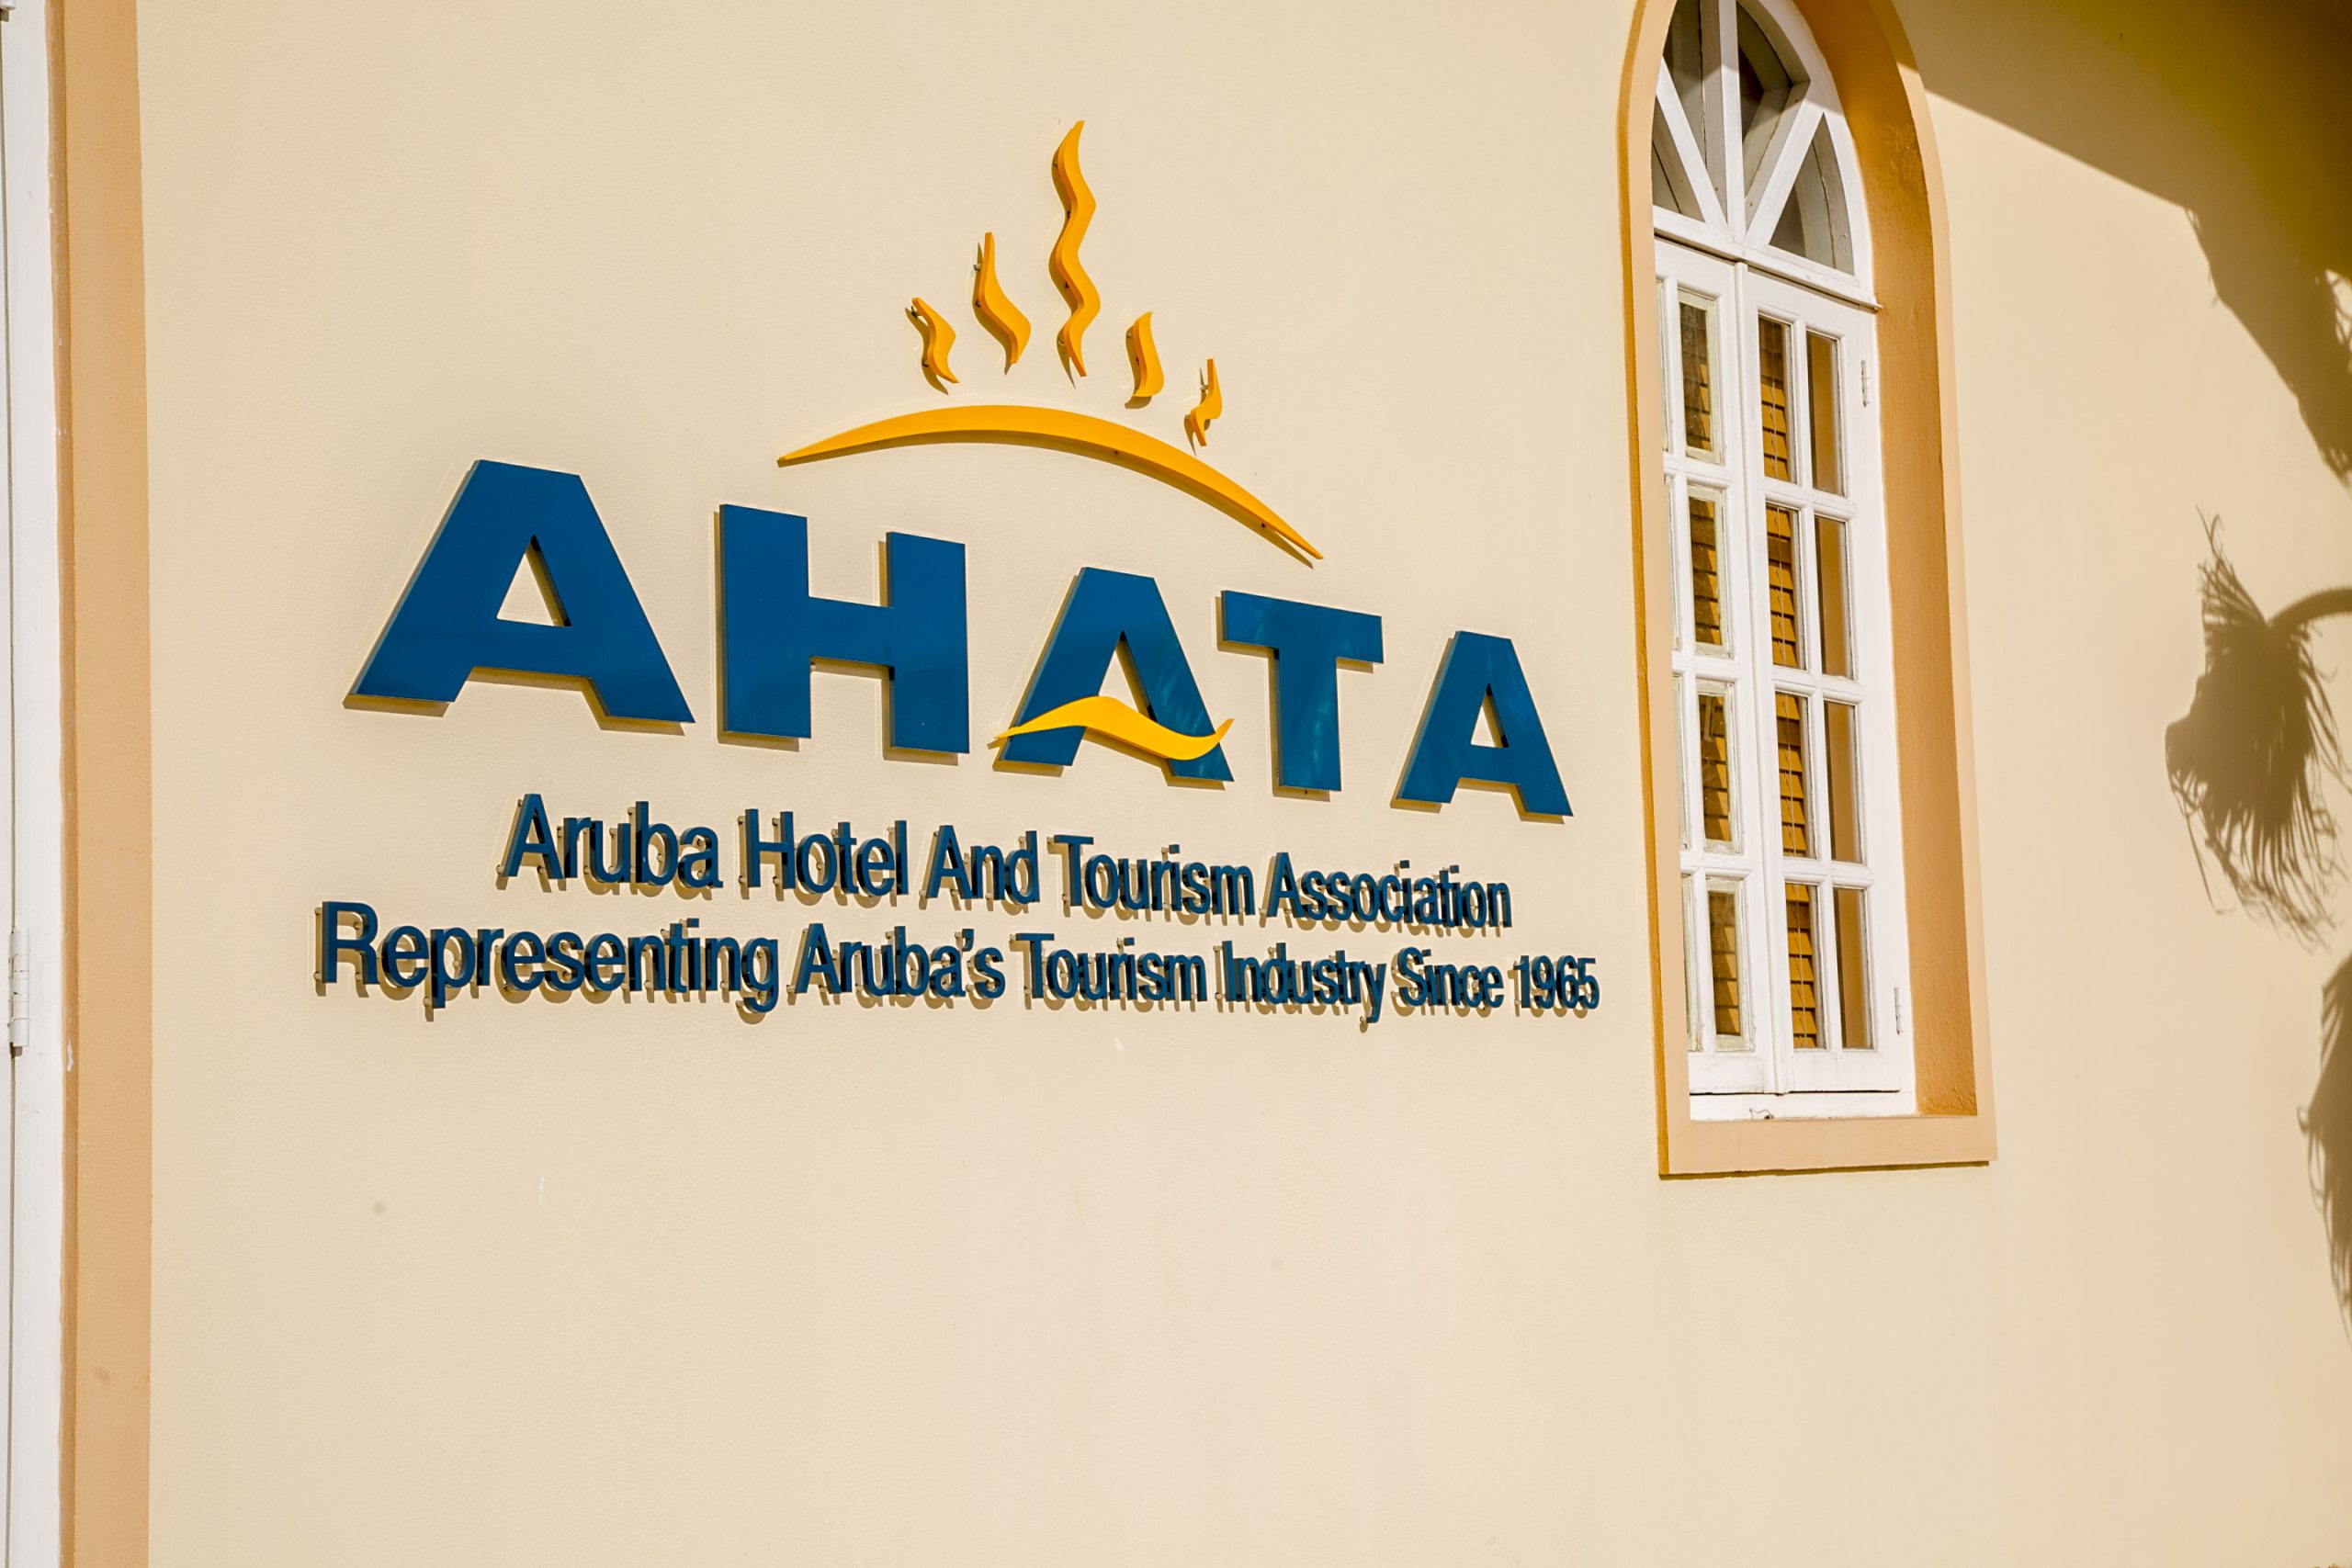 AHATA: Ocupacion di november tabata 72% menos cu na 2019